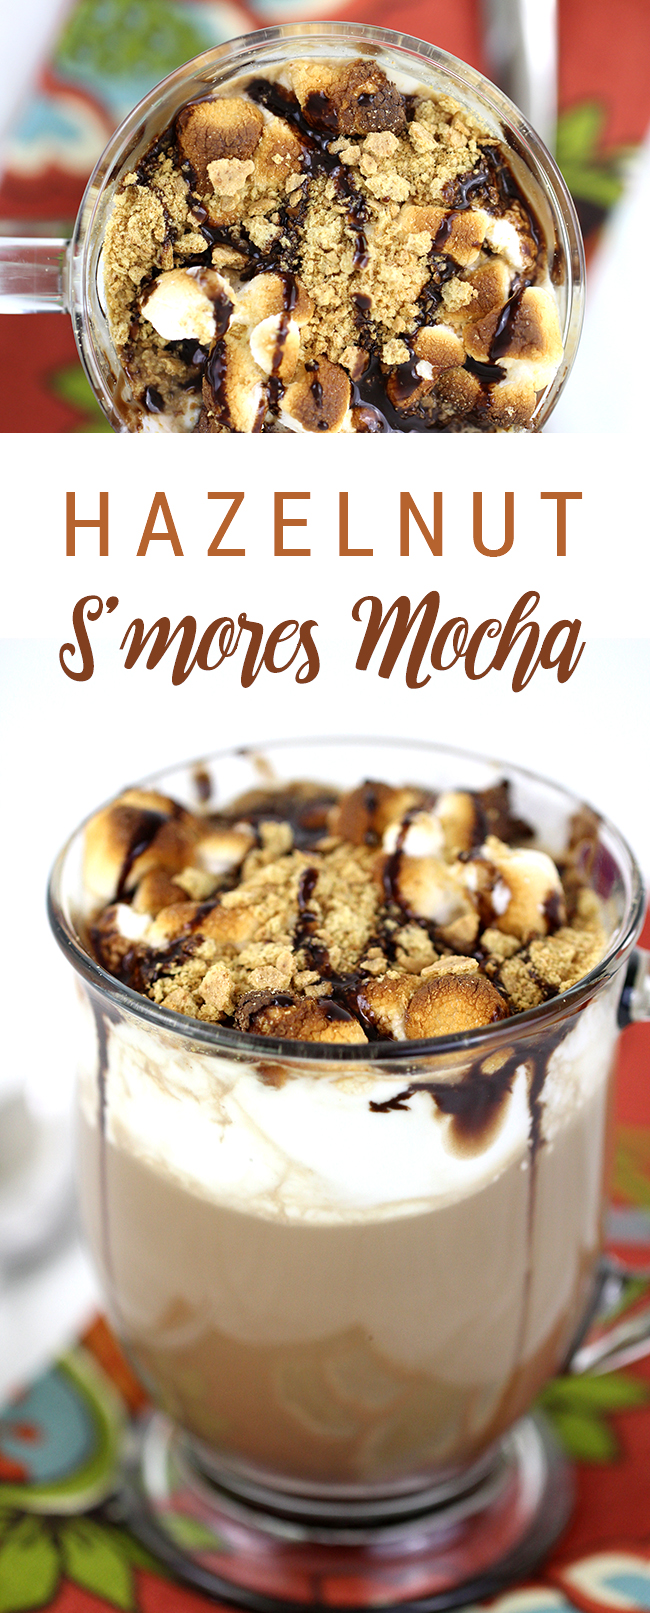 hazelnut s’mores mocha for one